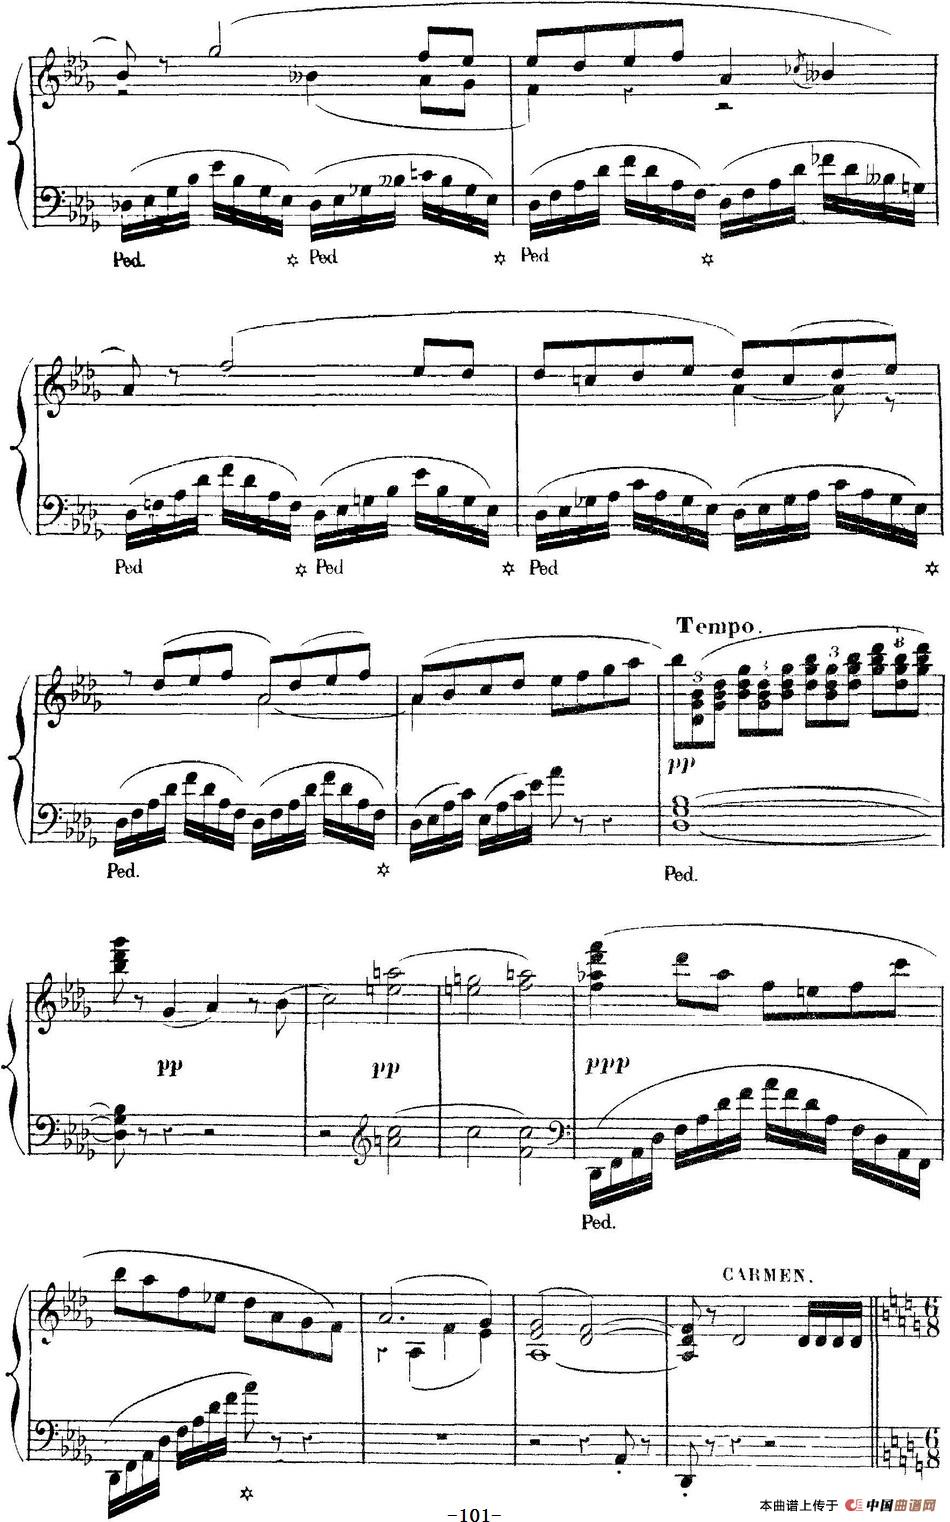 Carmen for Solo Piano（卡门全剧钢琴独奏版）（No.1